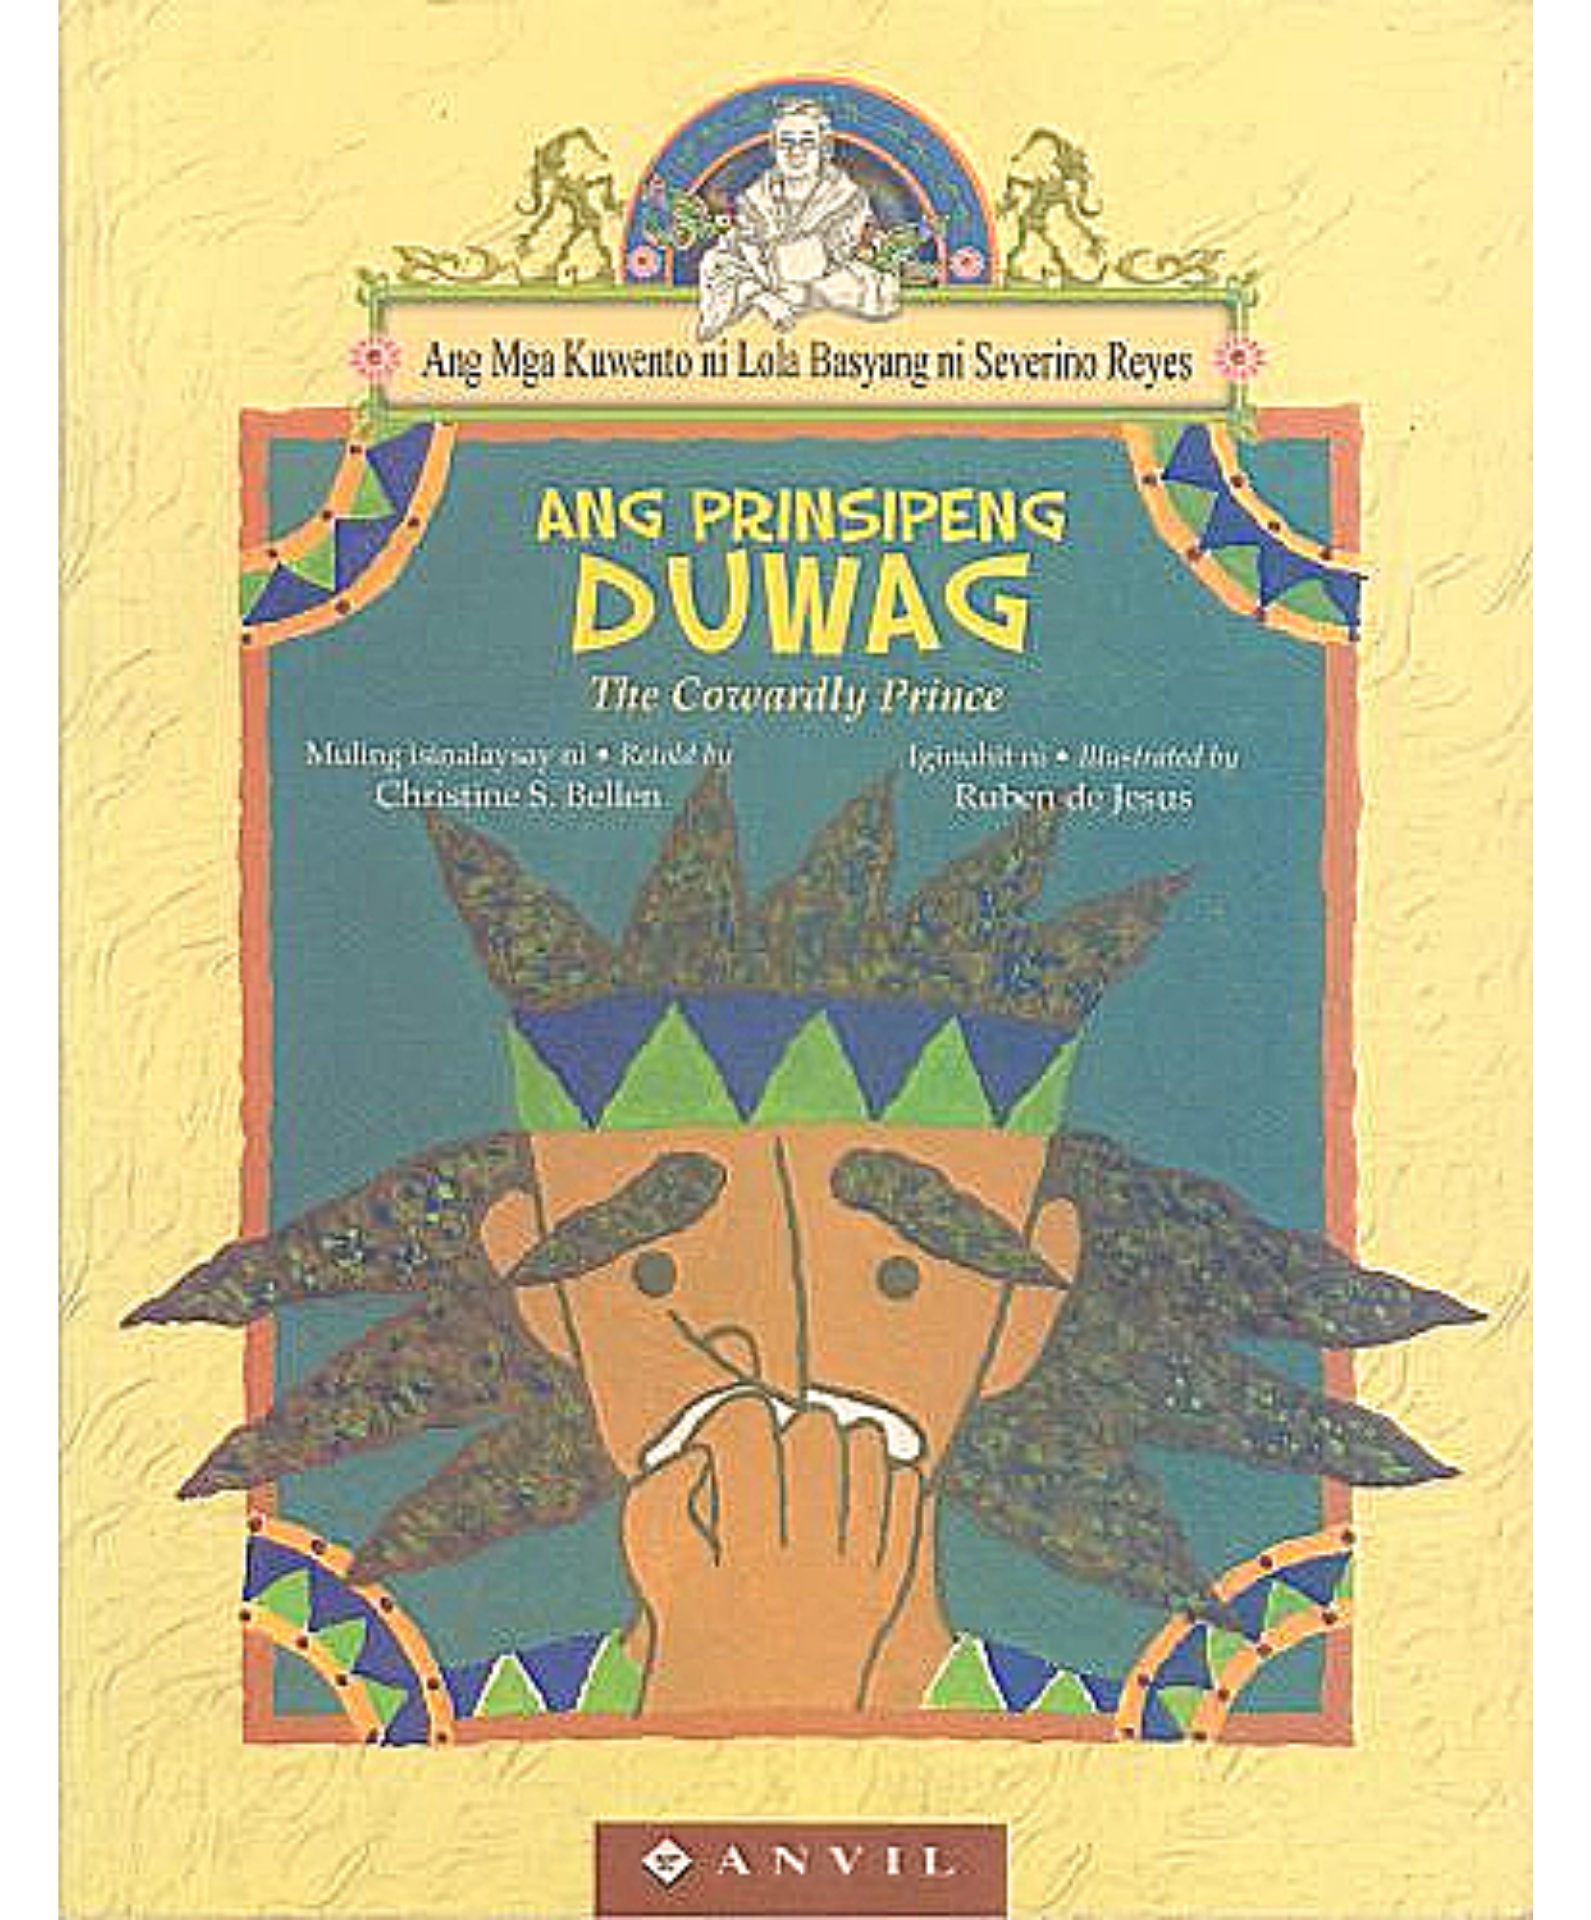 Lola Basyang: Ang Prinsipeng Duwag (The Cowardly Prince) - Philippine Expressions Bookshop